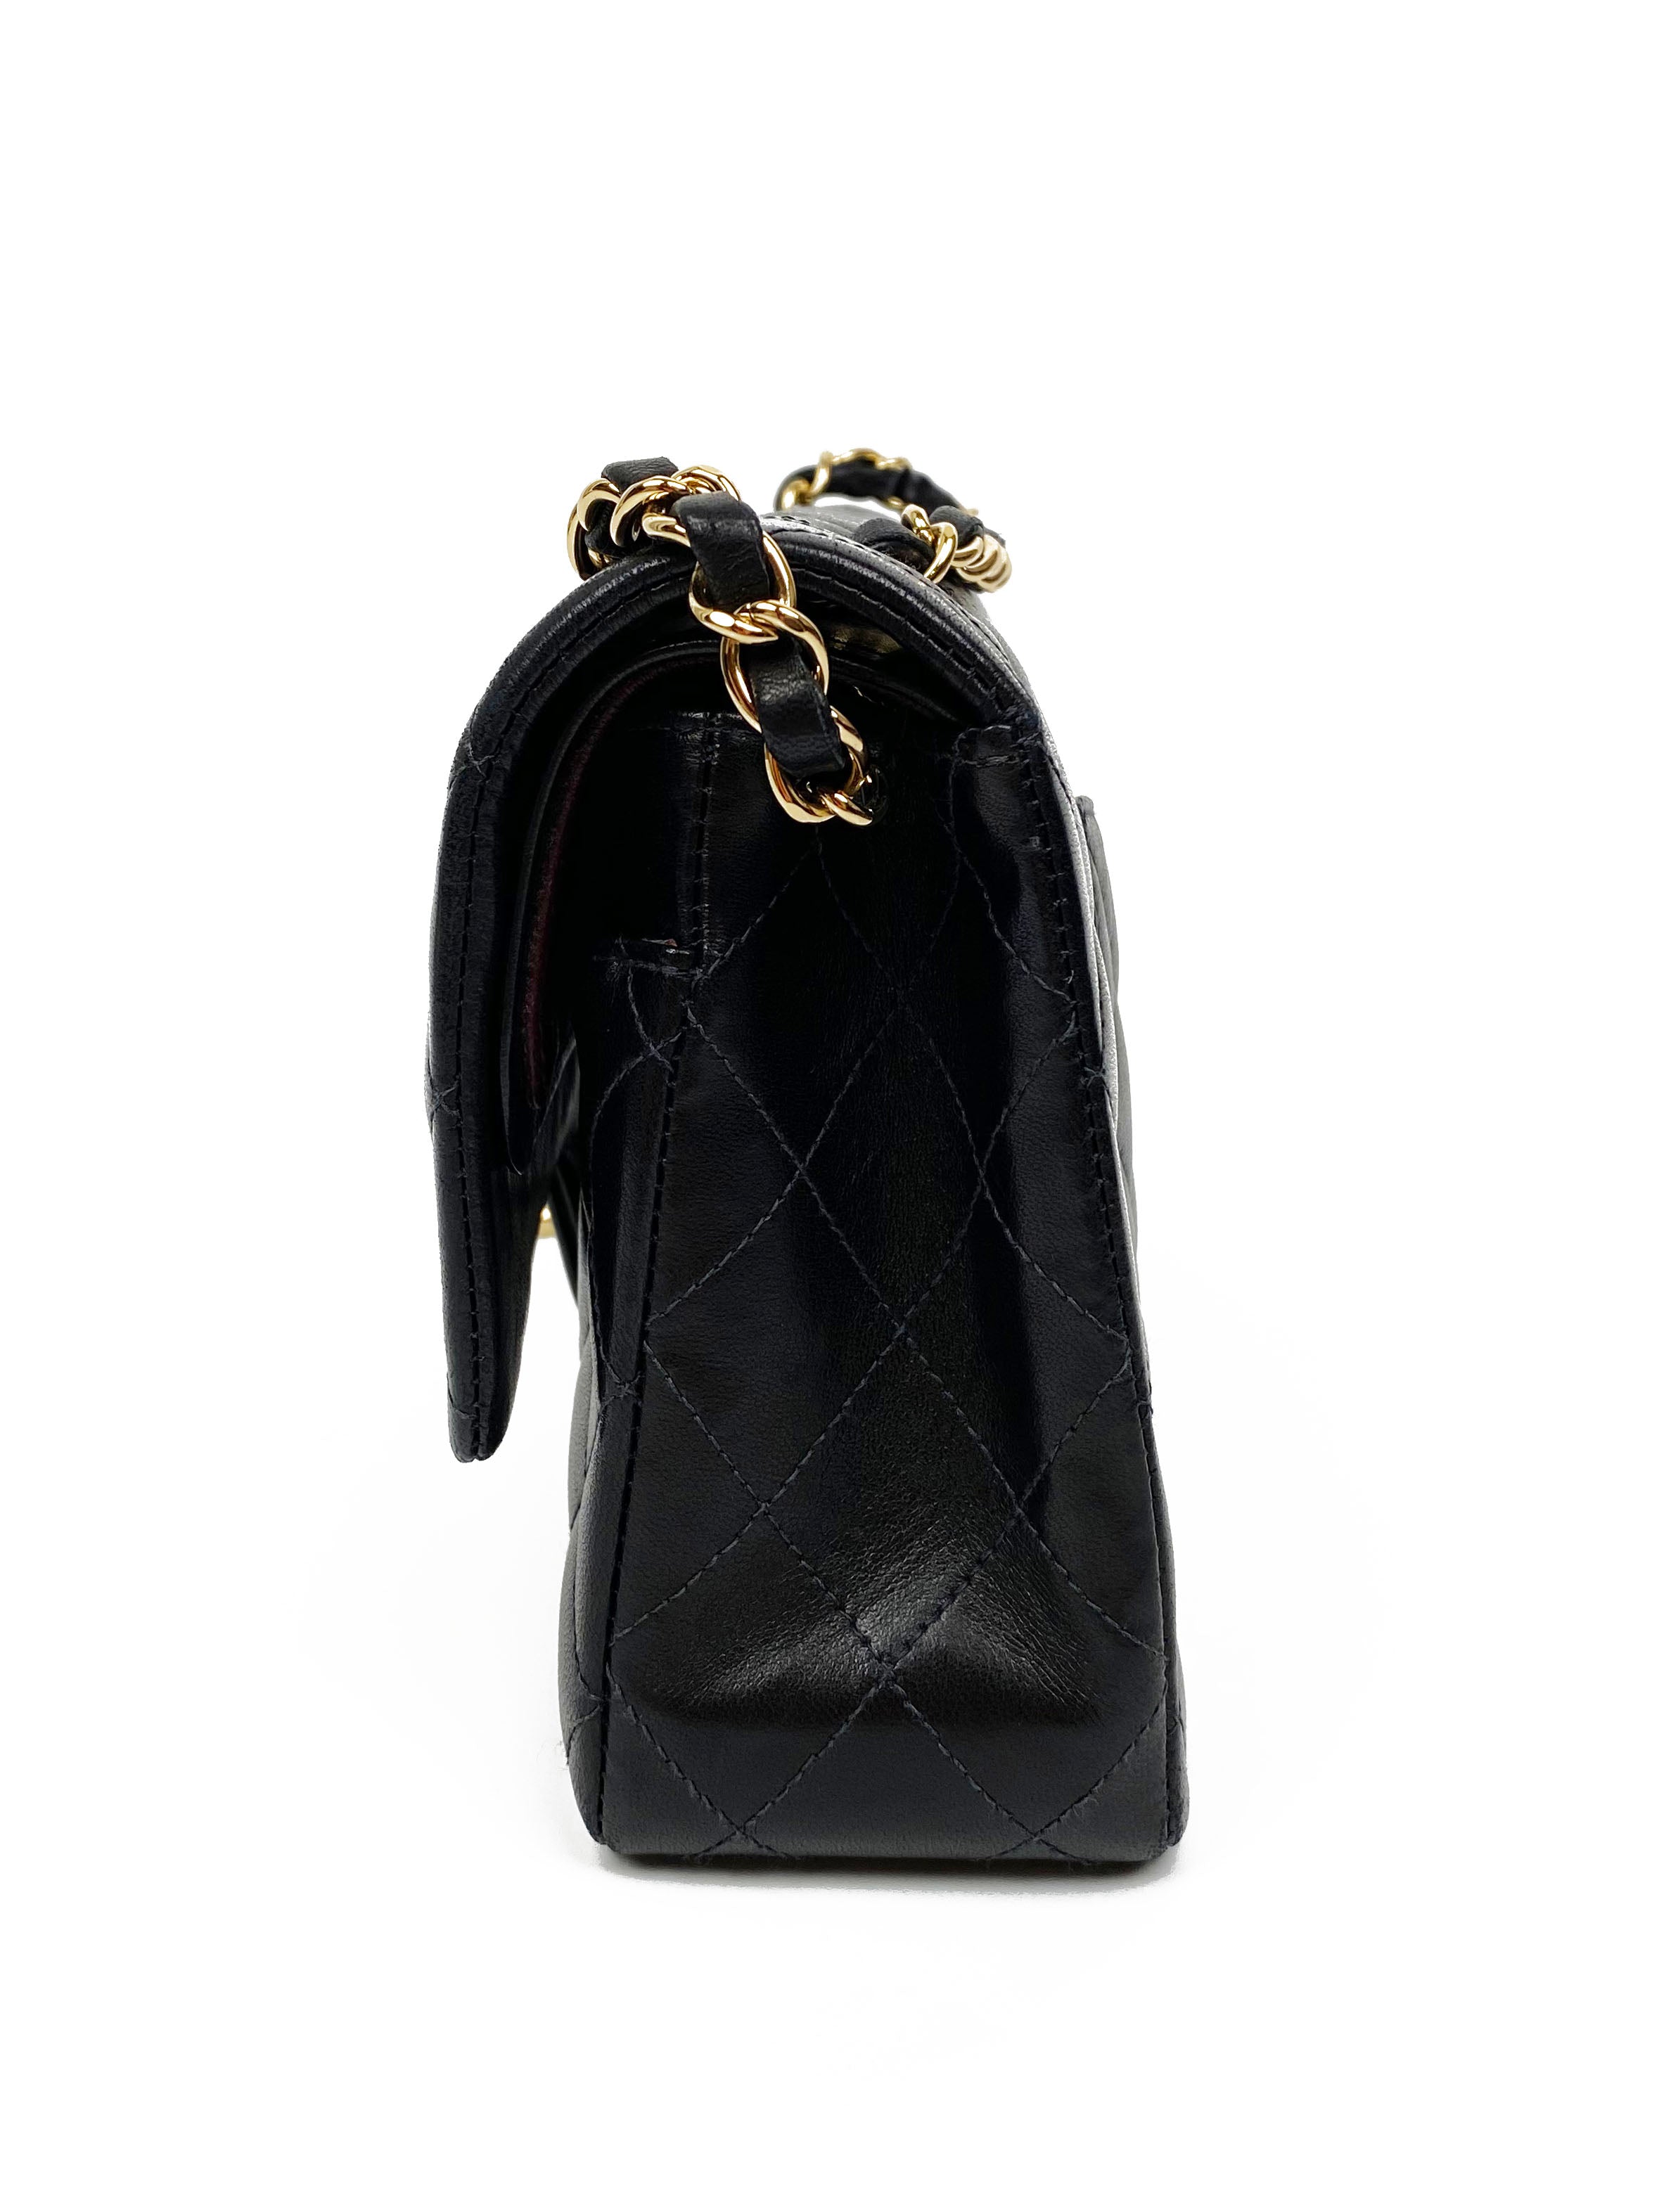 Chanel Medium Black Lambskin Classic Flap Bag